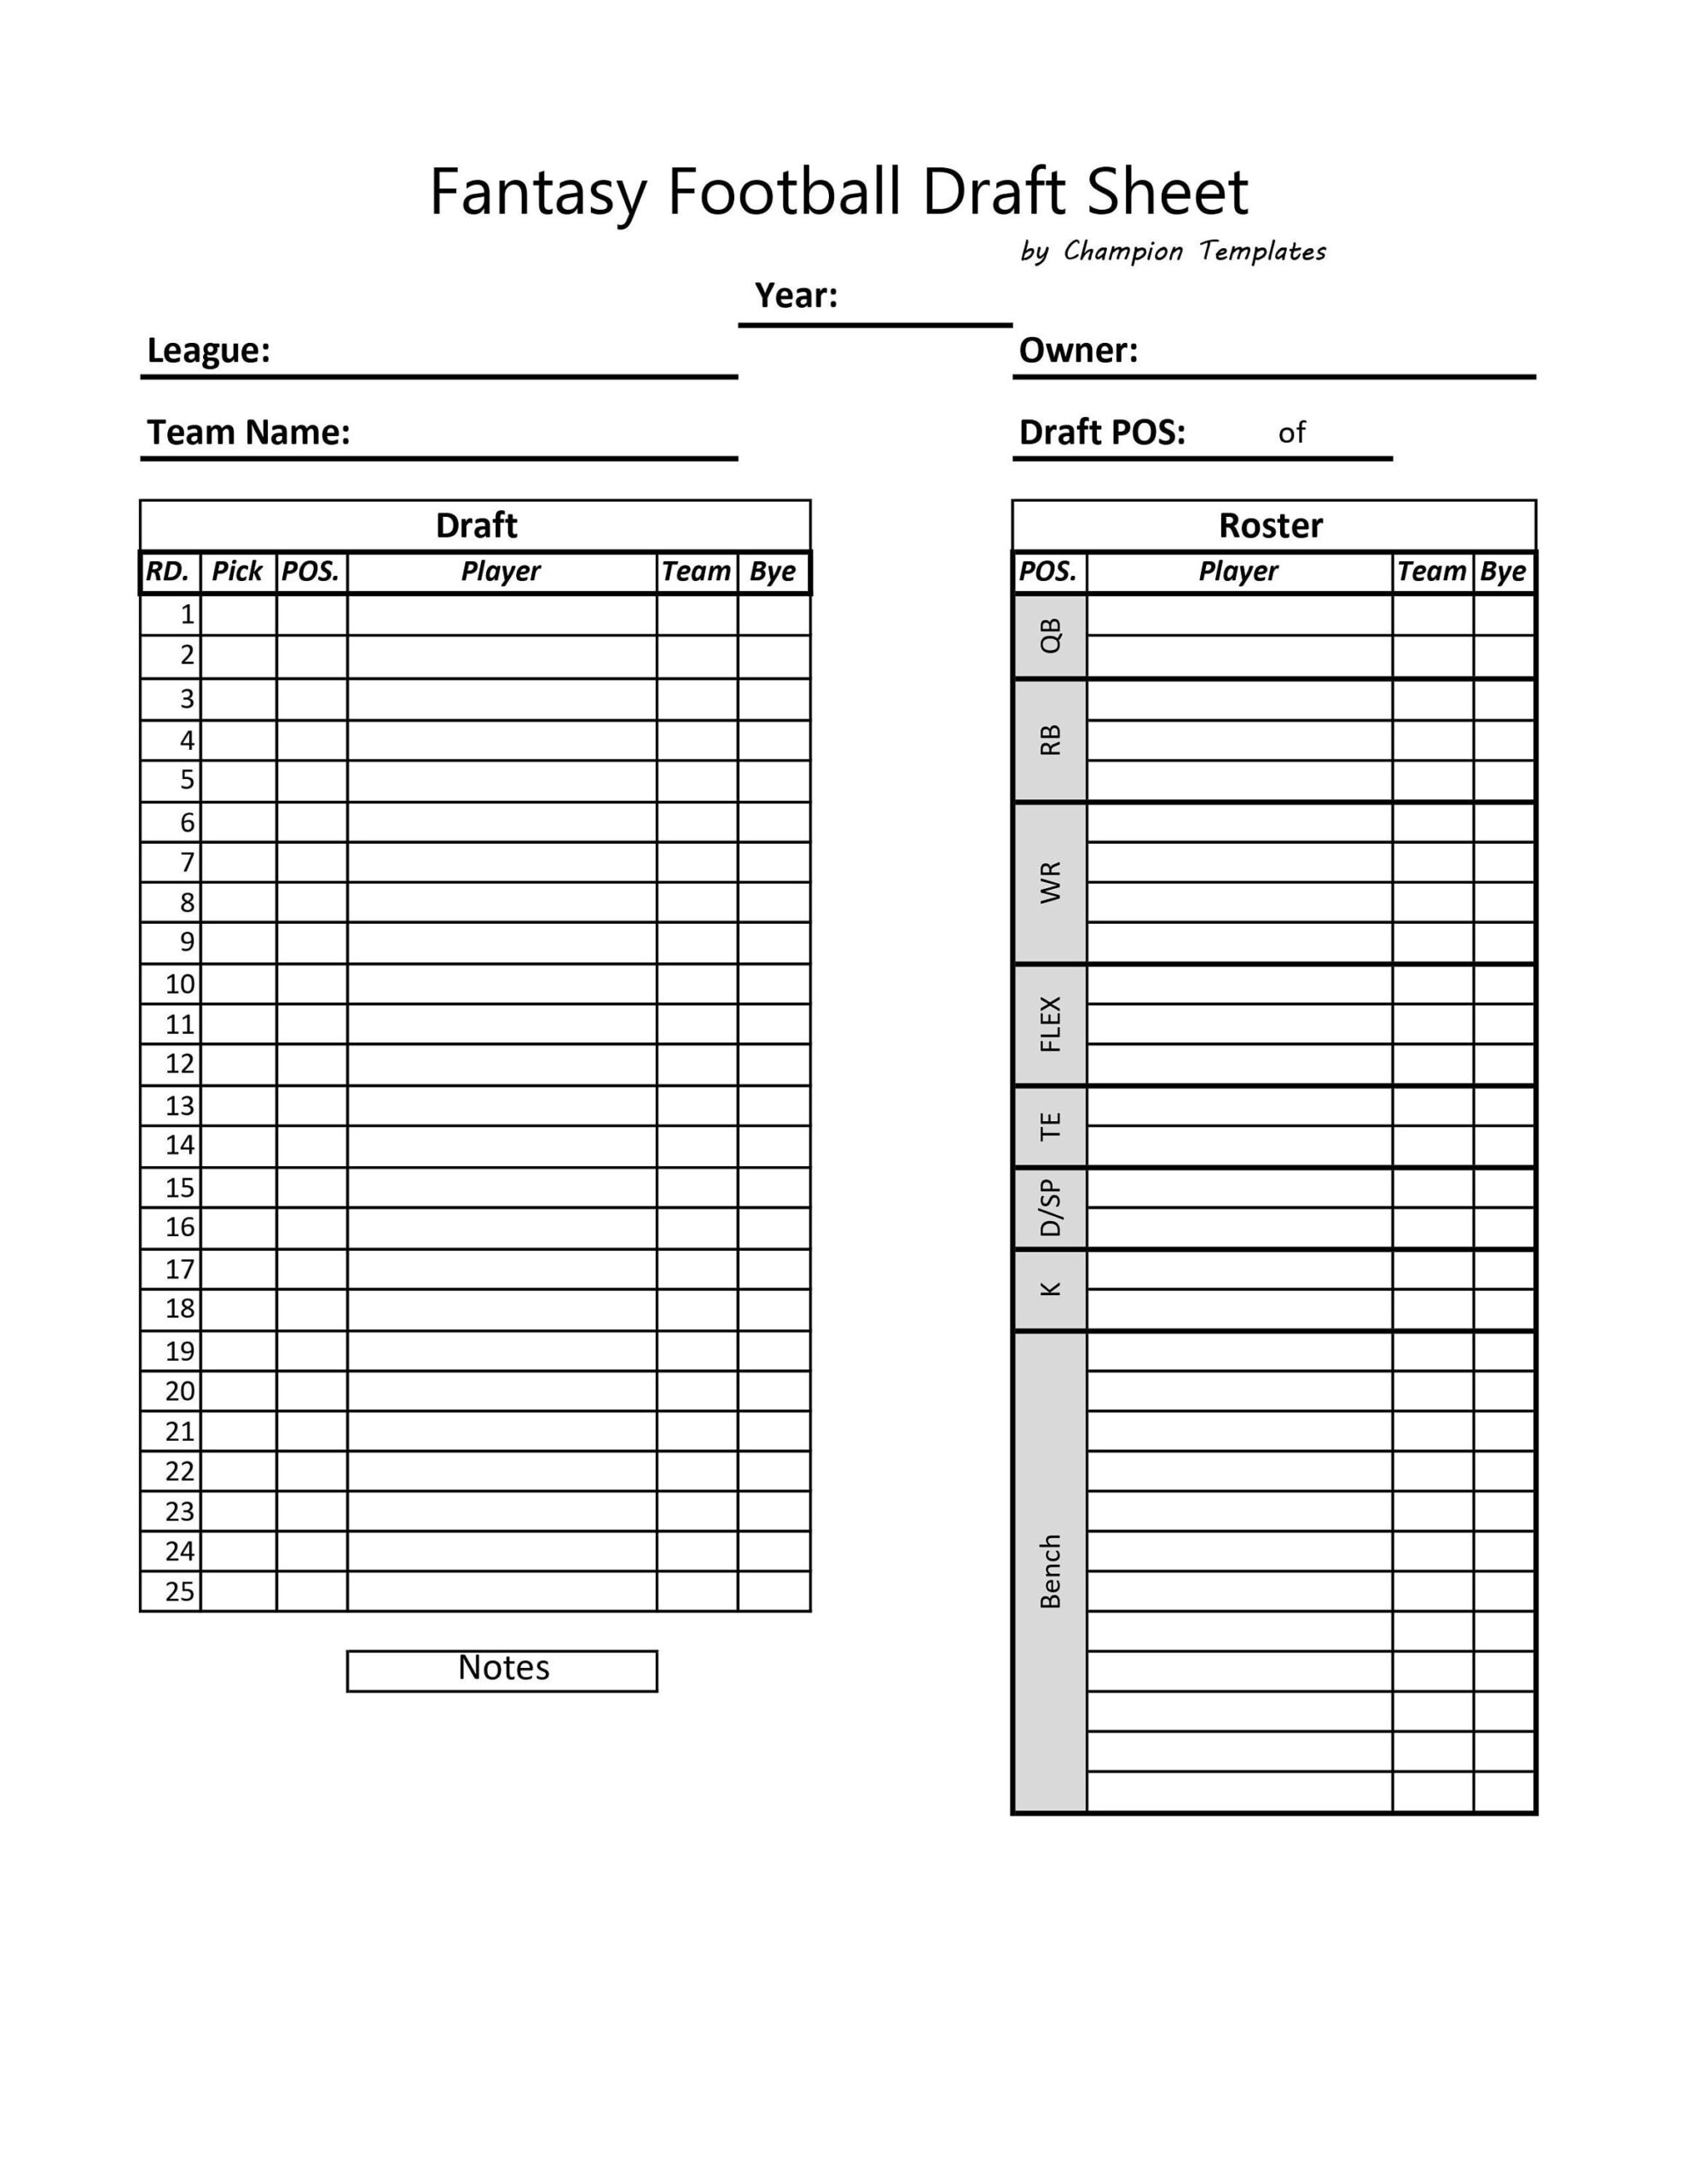 Fantasy Football Draft Day Sheet Template - Etsy regarding Fantasy Football Draft Sheets Printable Free